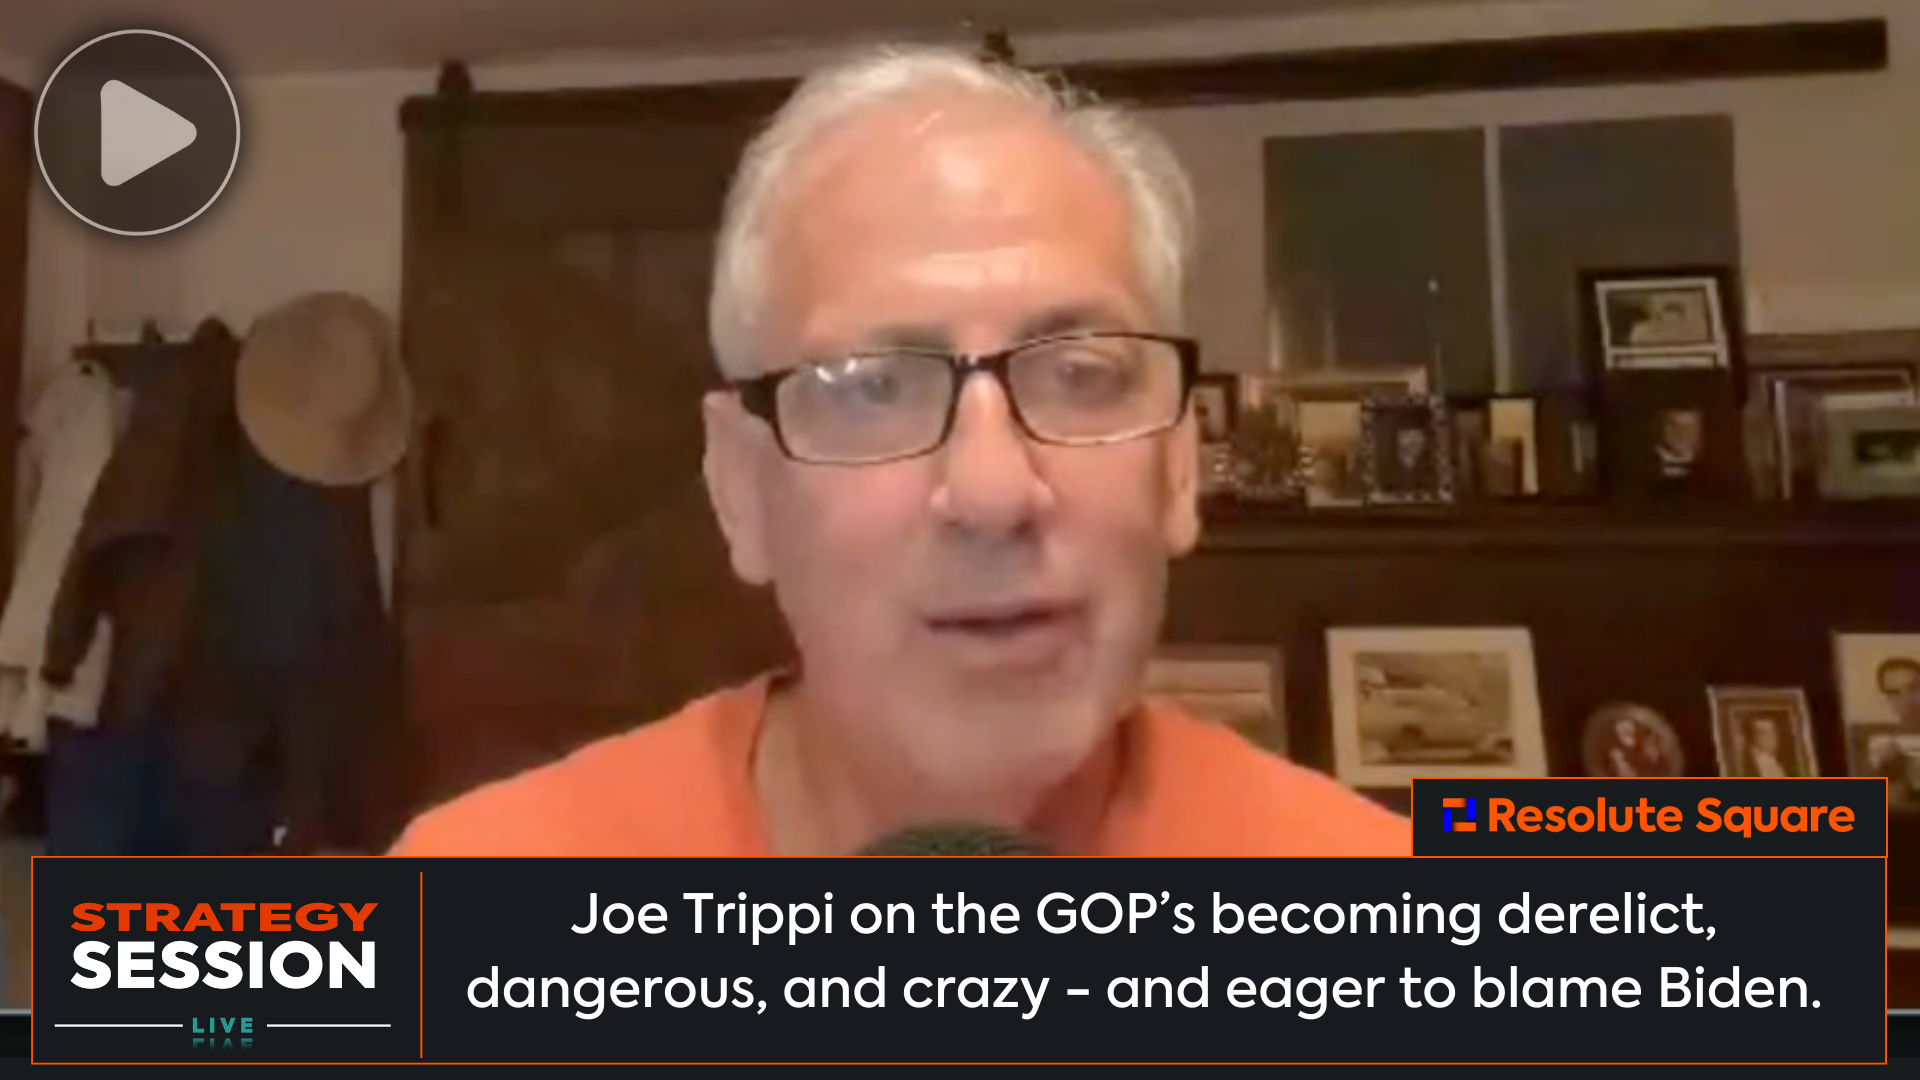 Joe Trippi: They're derelict, dangerous, and crazy. 